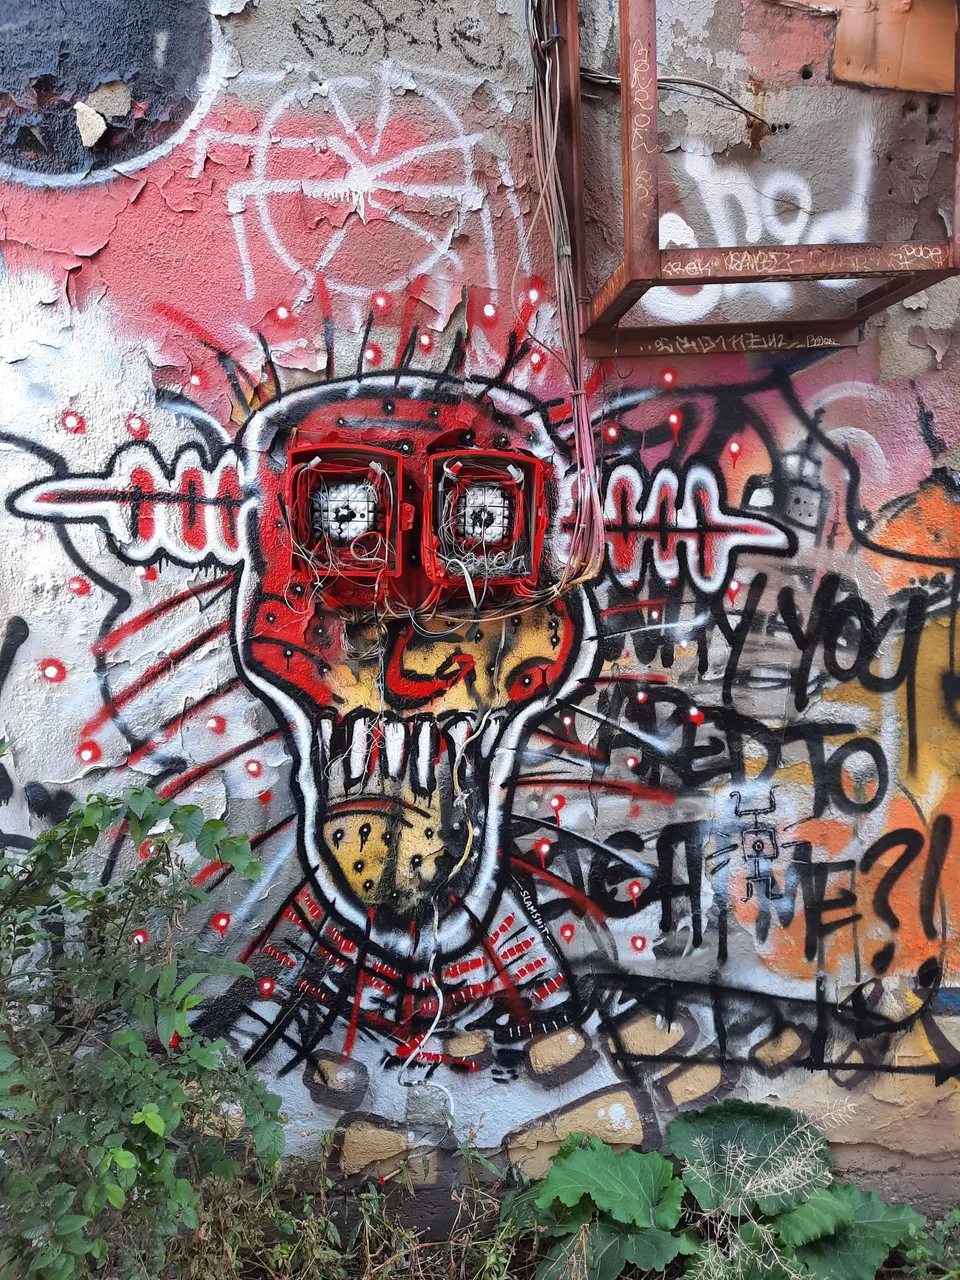 831 - (zykisart) Graffiti Alley.jpg